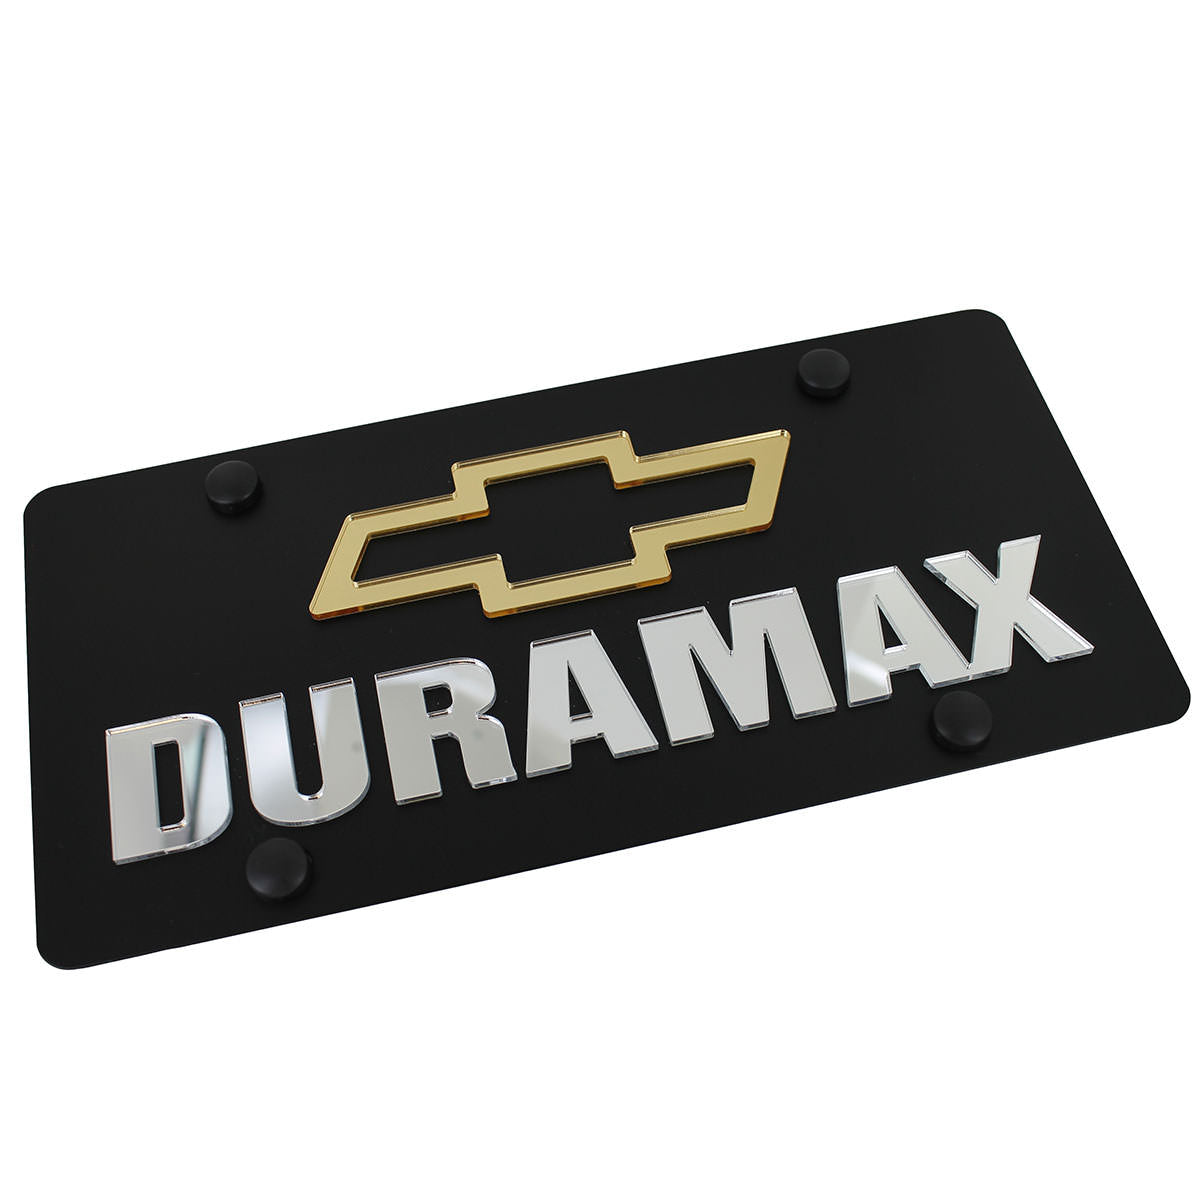 Chevy Duramax License Plate